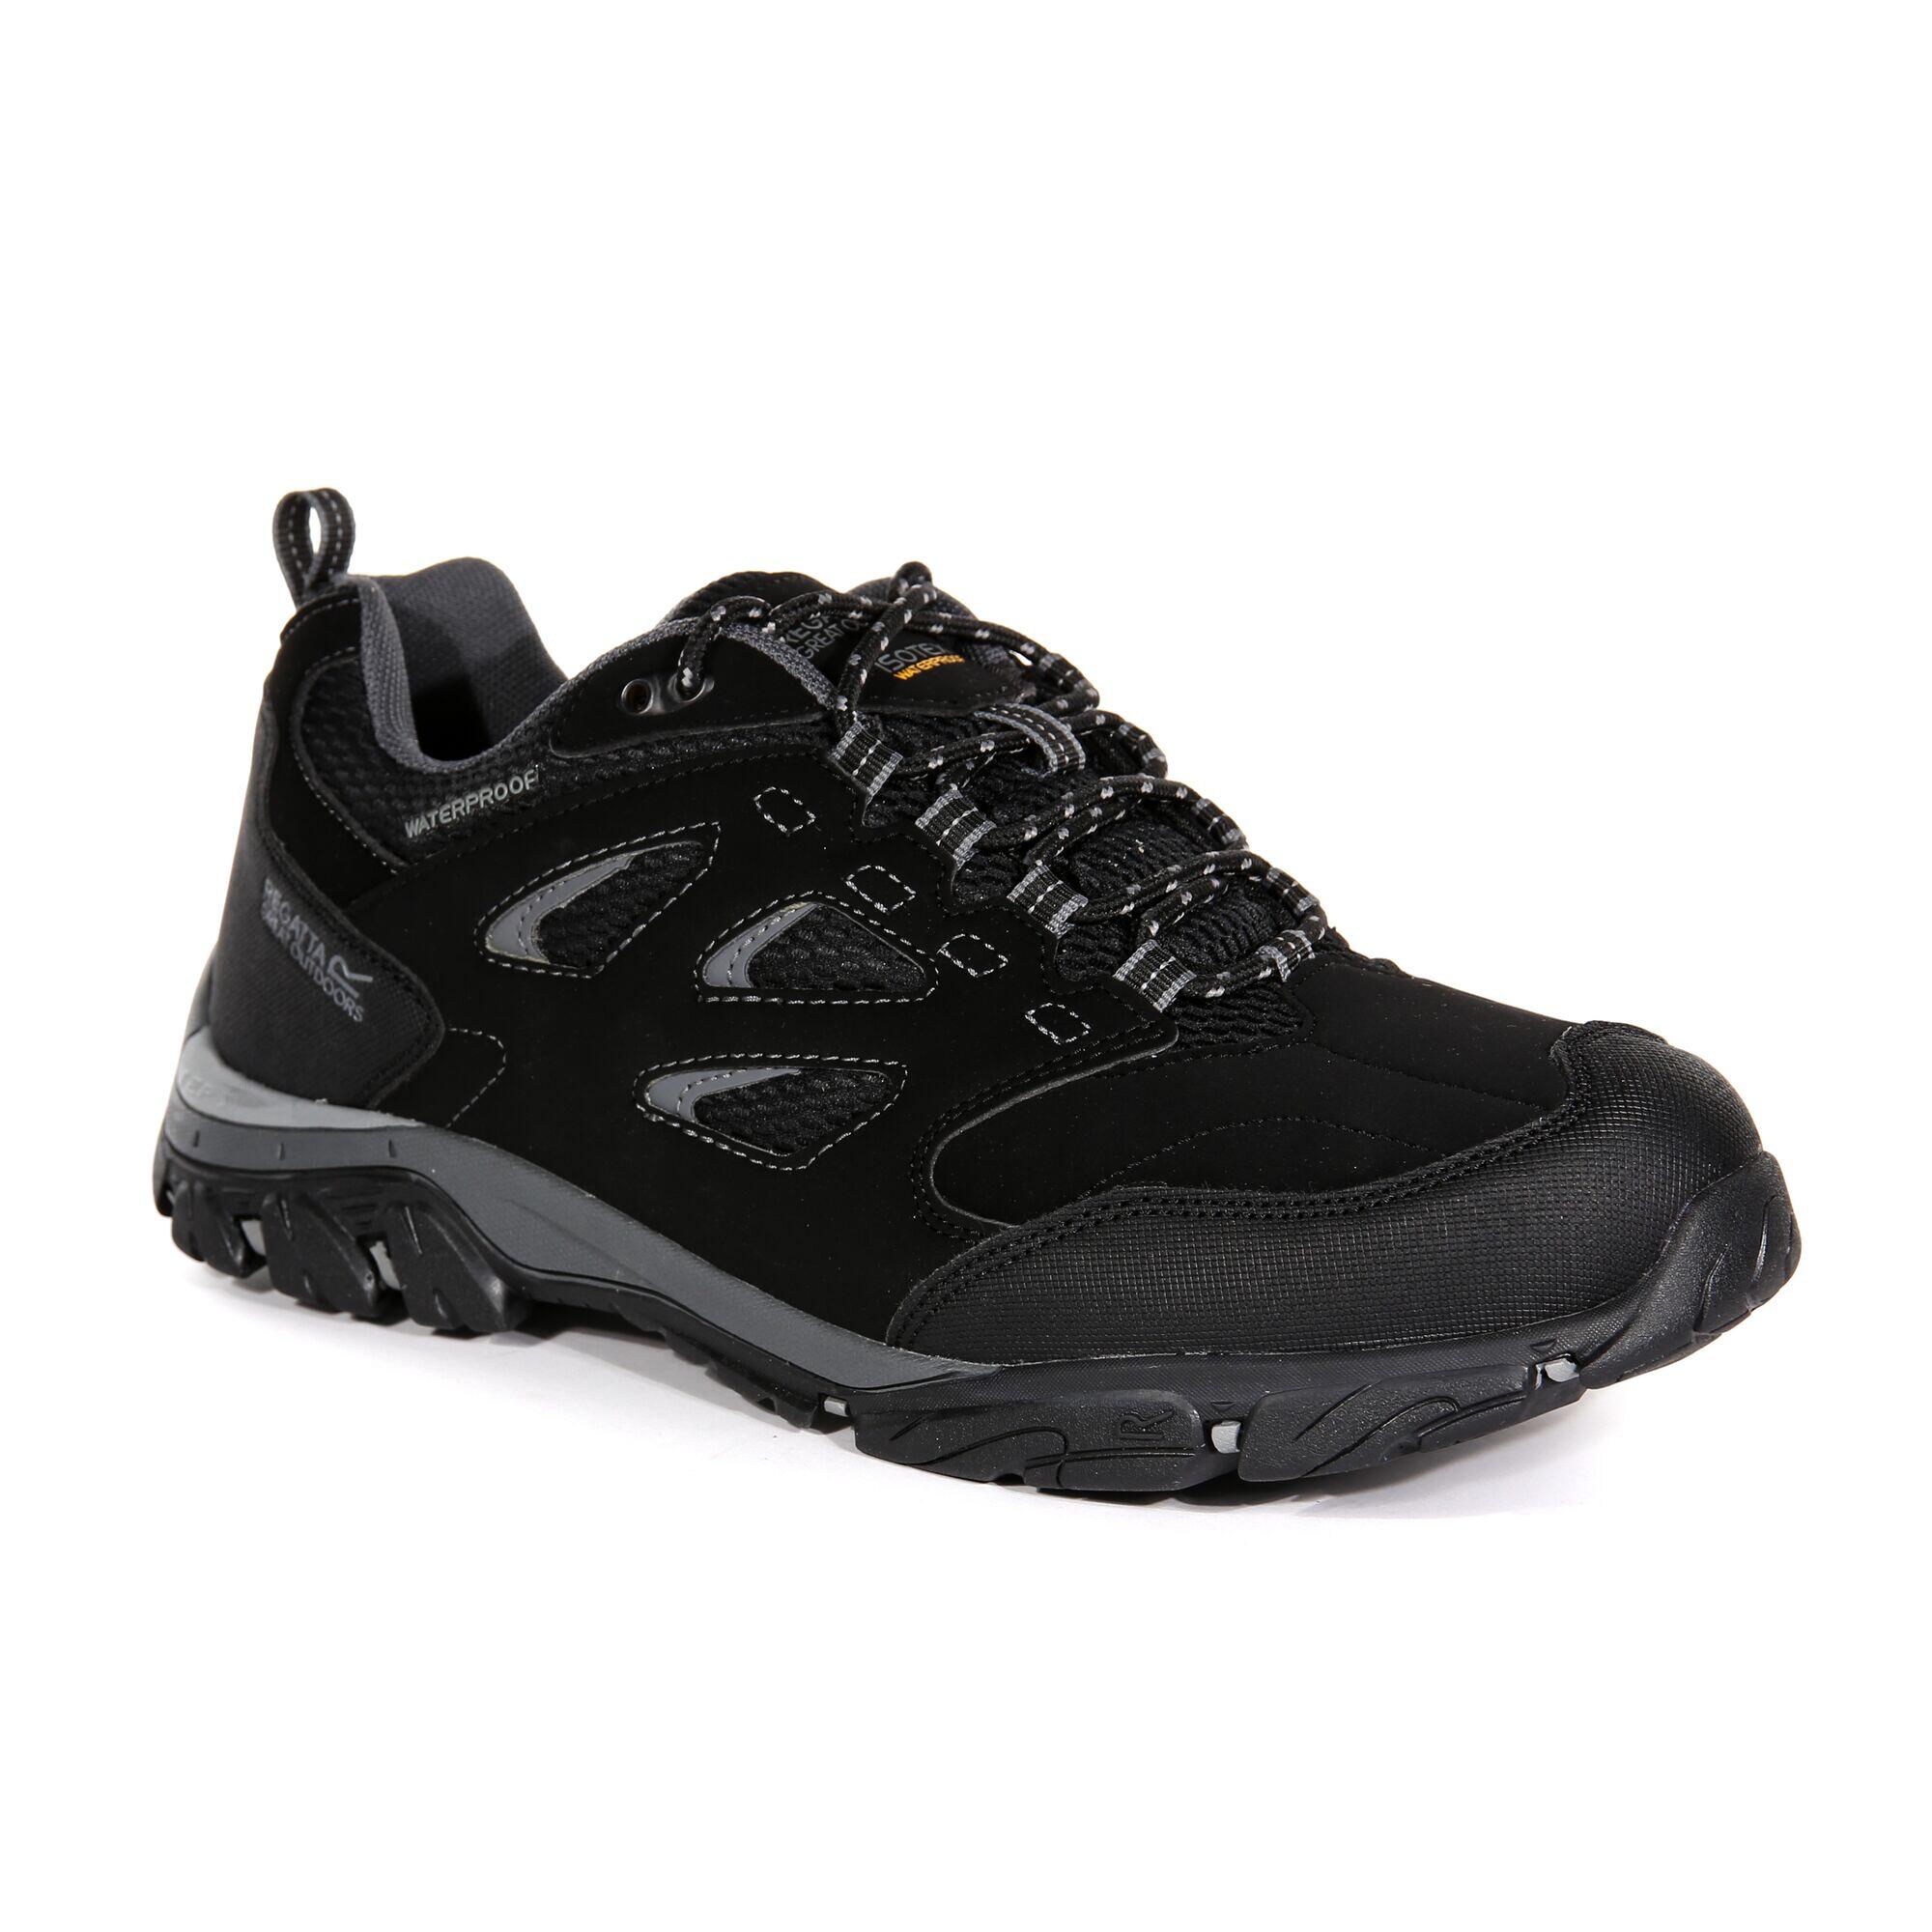 Holcombe IEP Low Men's Hiking Boots - Black Granite 2/5